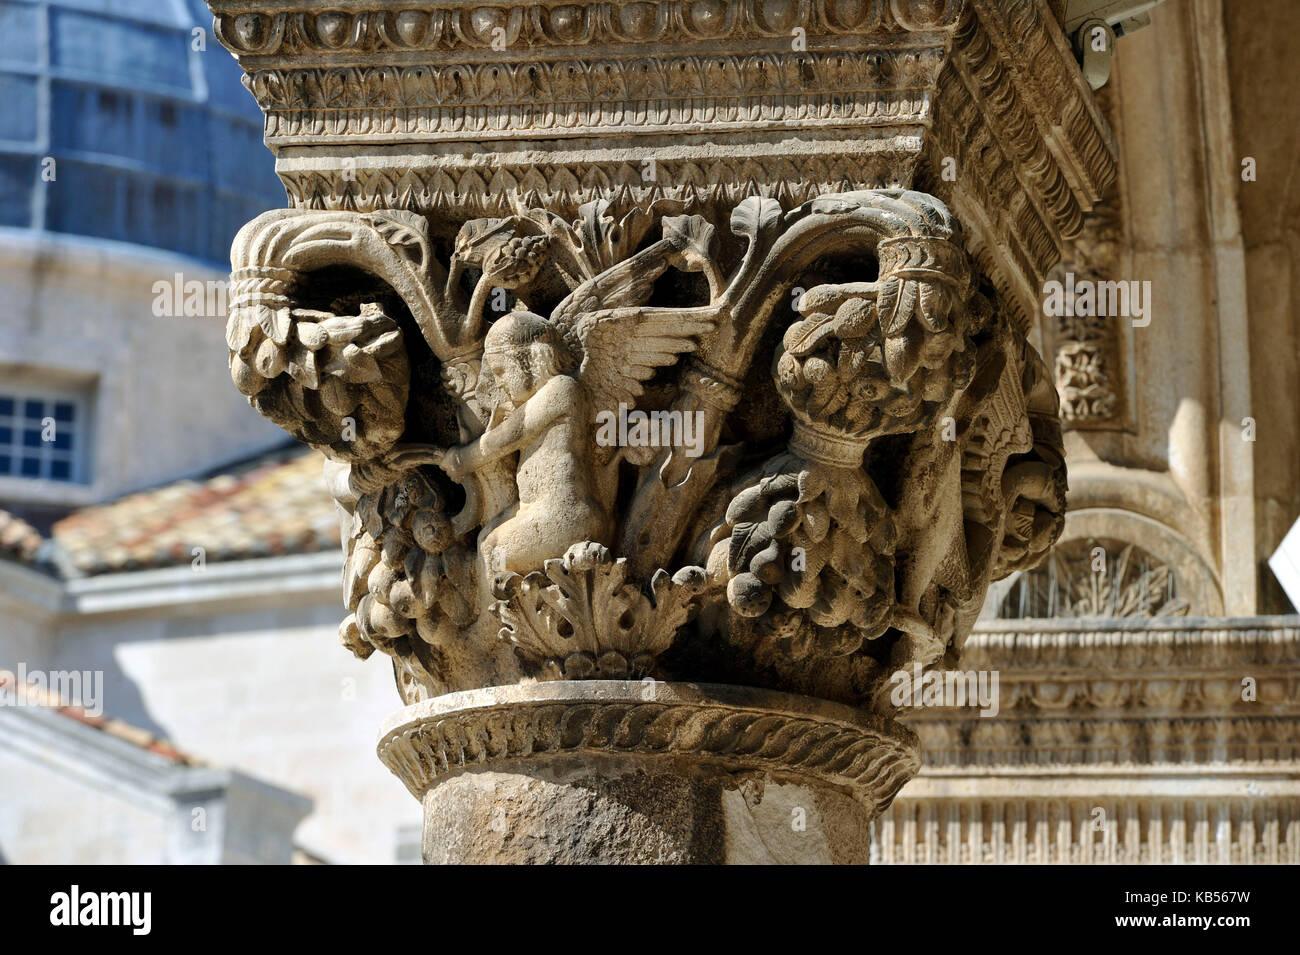 Croatia, Dalmatia, Dalmatian Coast, Dubrovnik, historical centre, listed as World Heritage by UNESCO, Rector's Palace Stock Photo